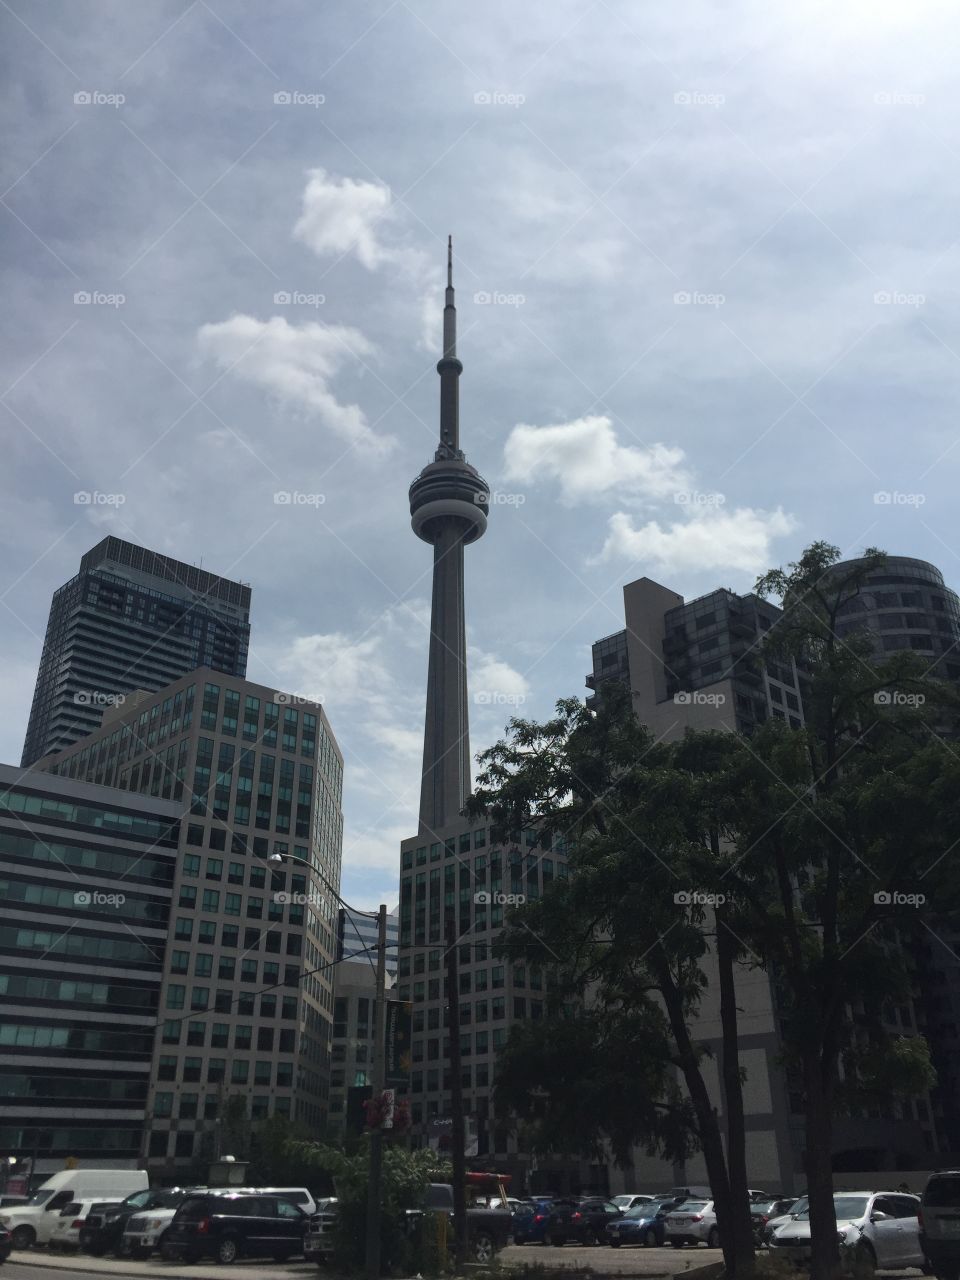 The City of Toronto 